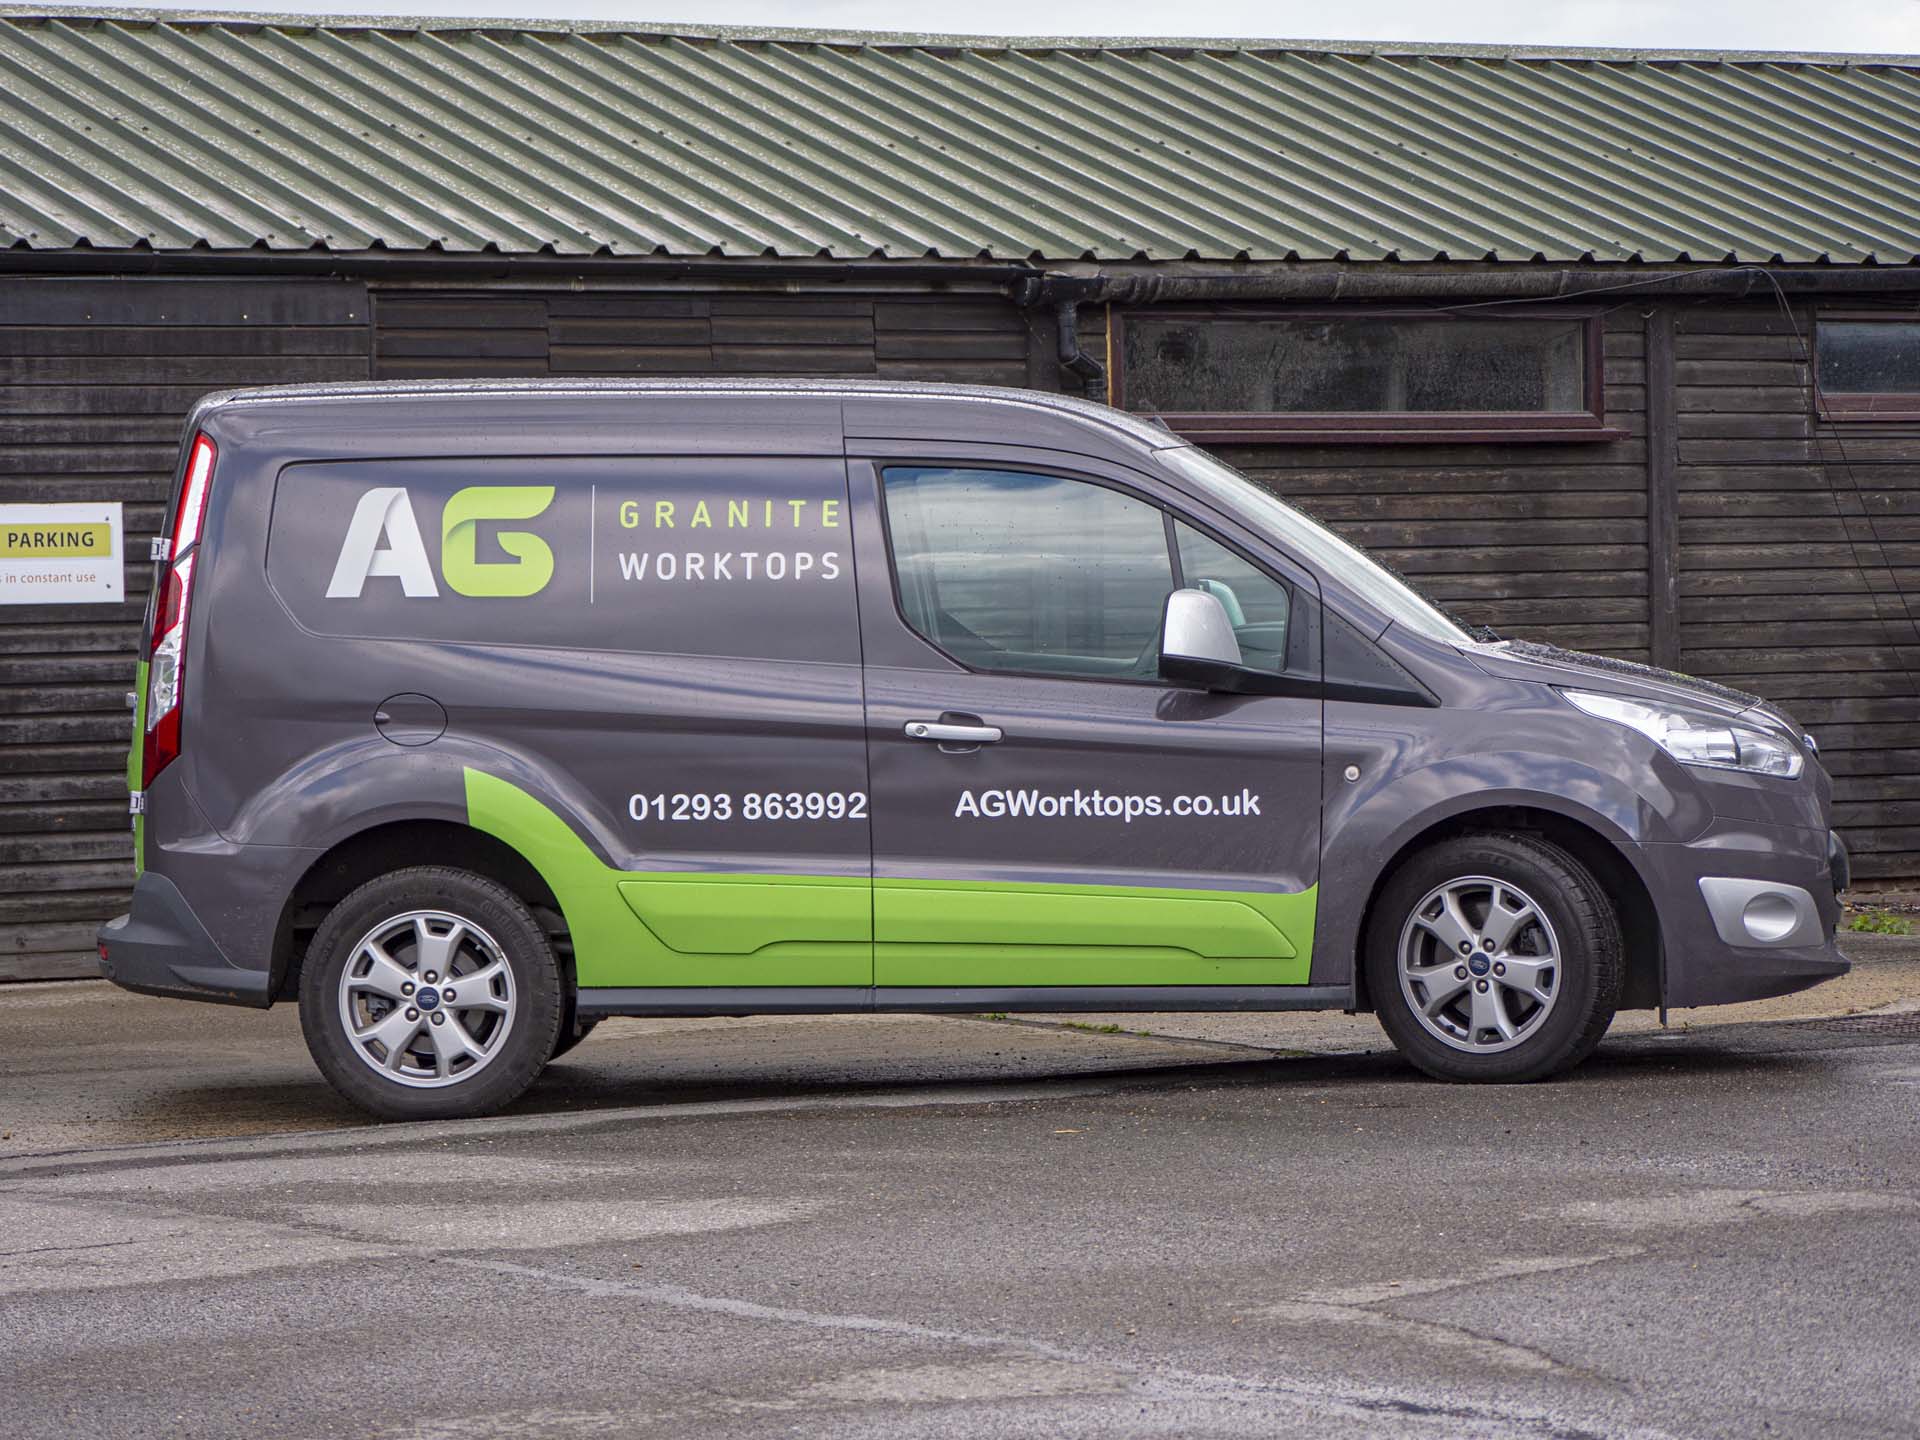 AG Worktops affordable granite vans new logo new name design templator's van